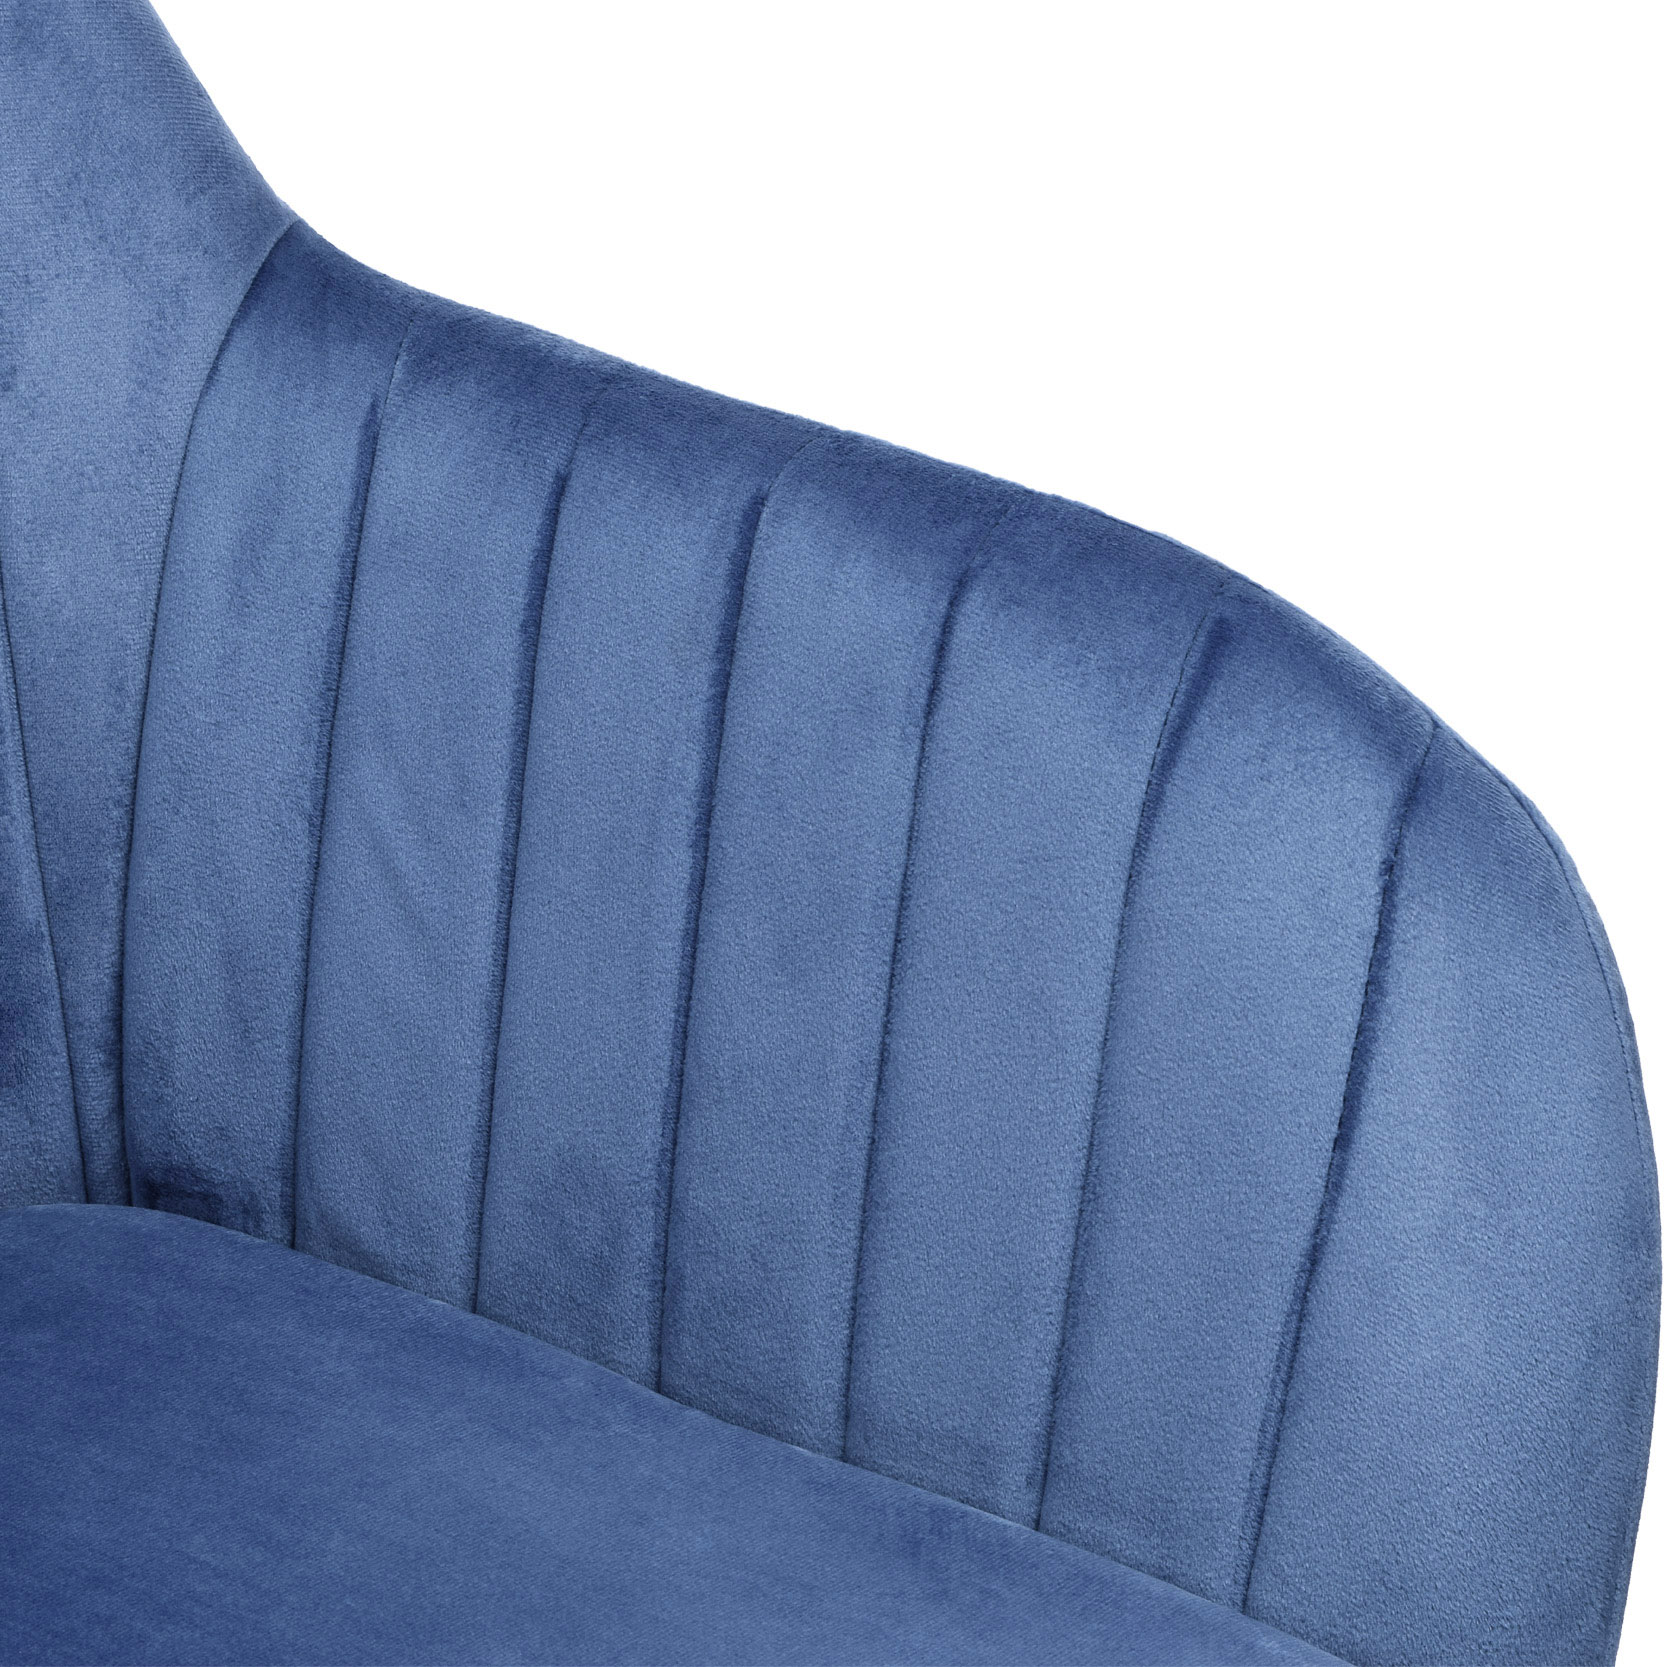 Krzesło welurowe SEVILLA VELVET niebieskie